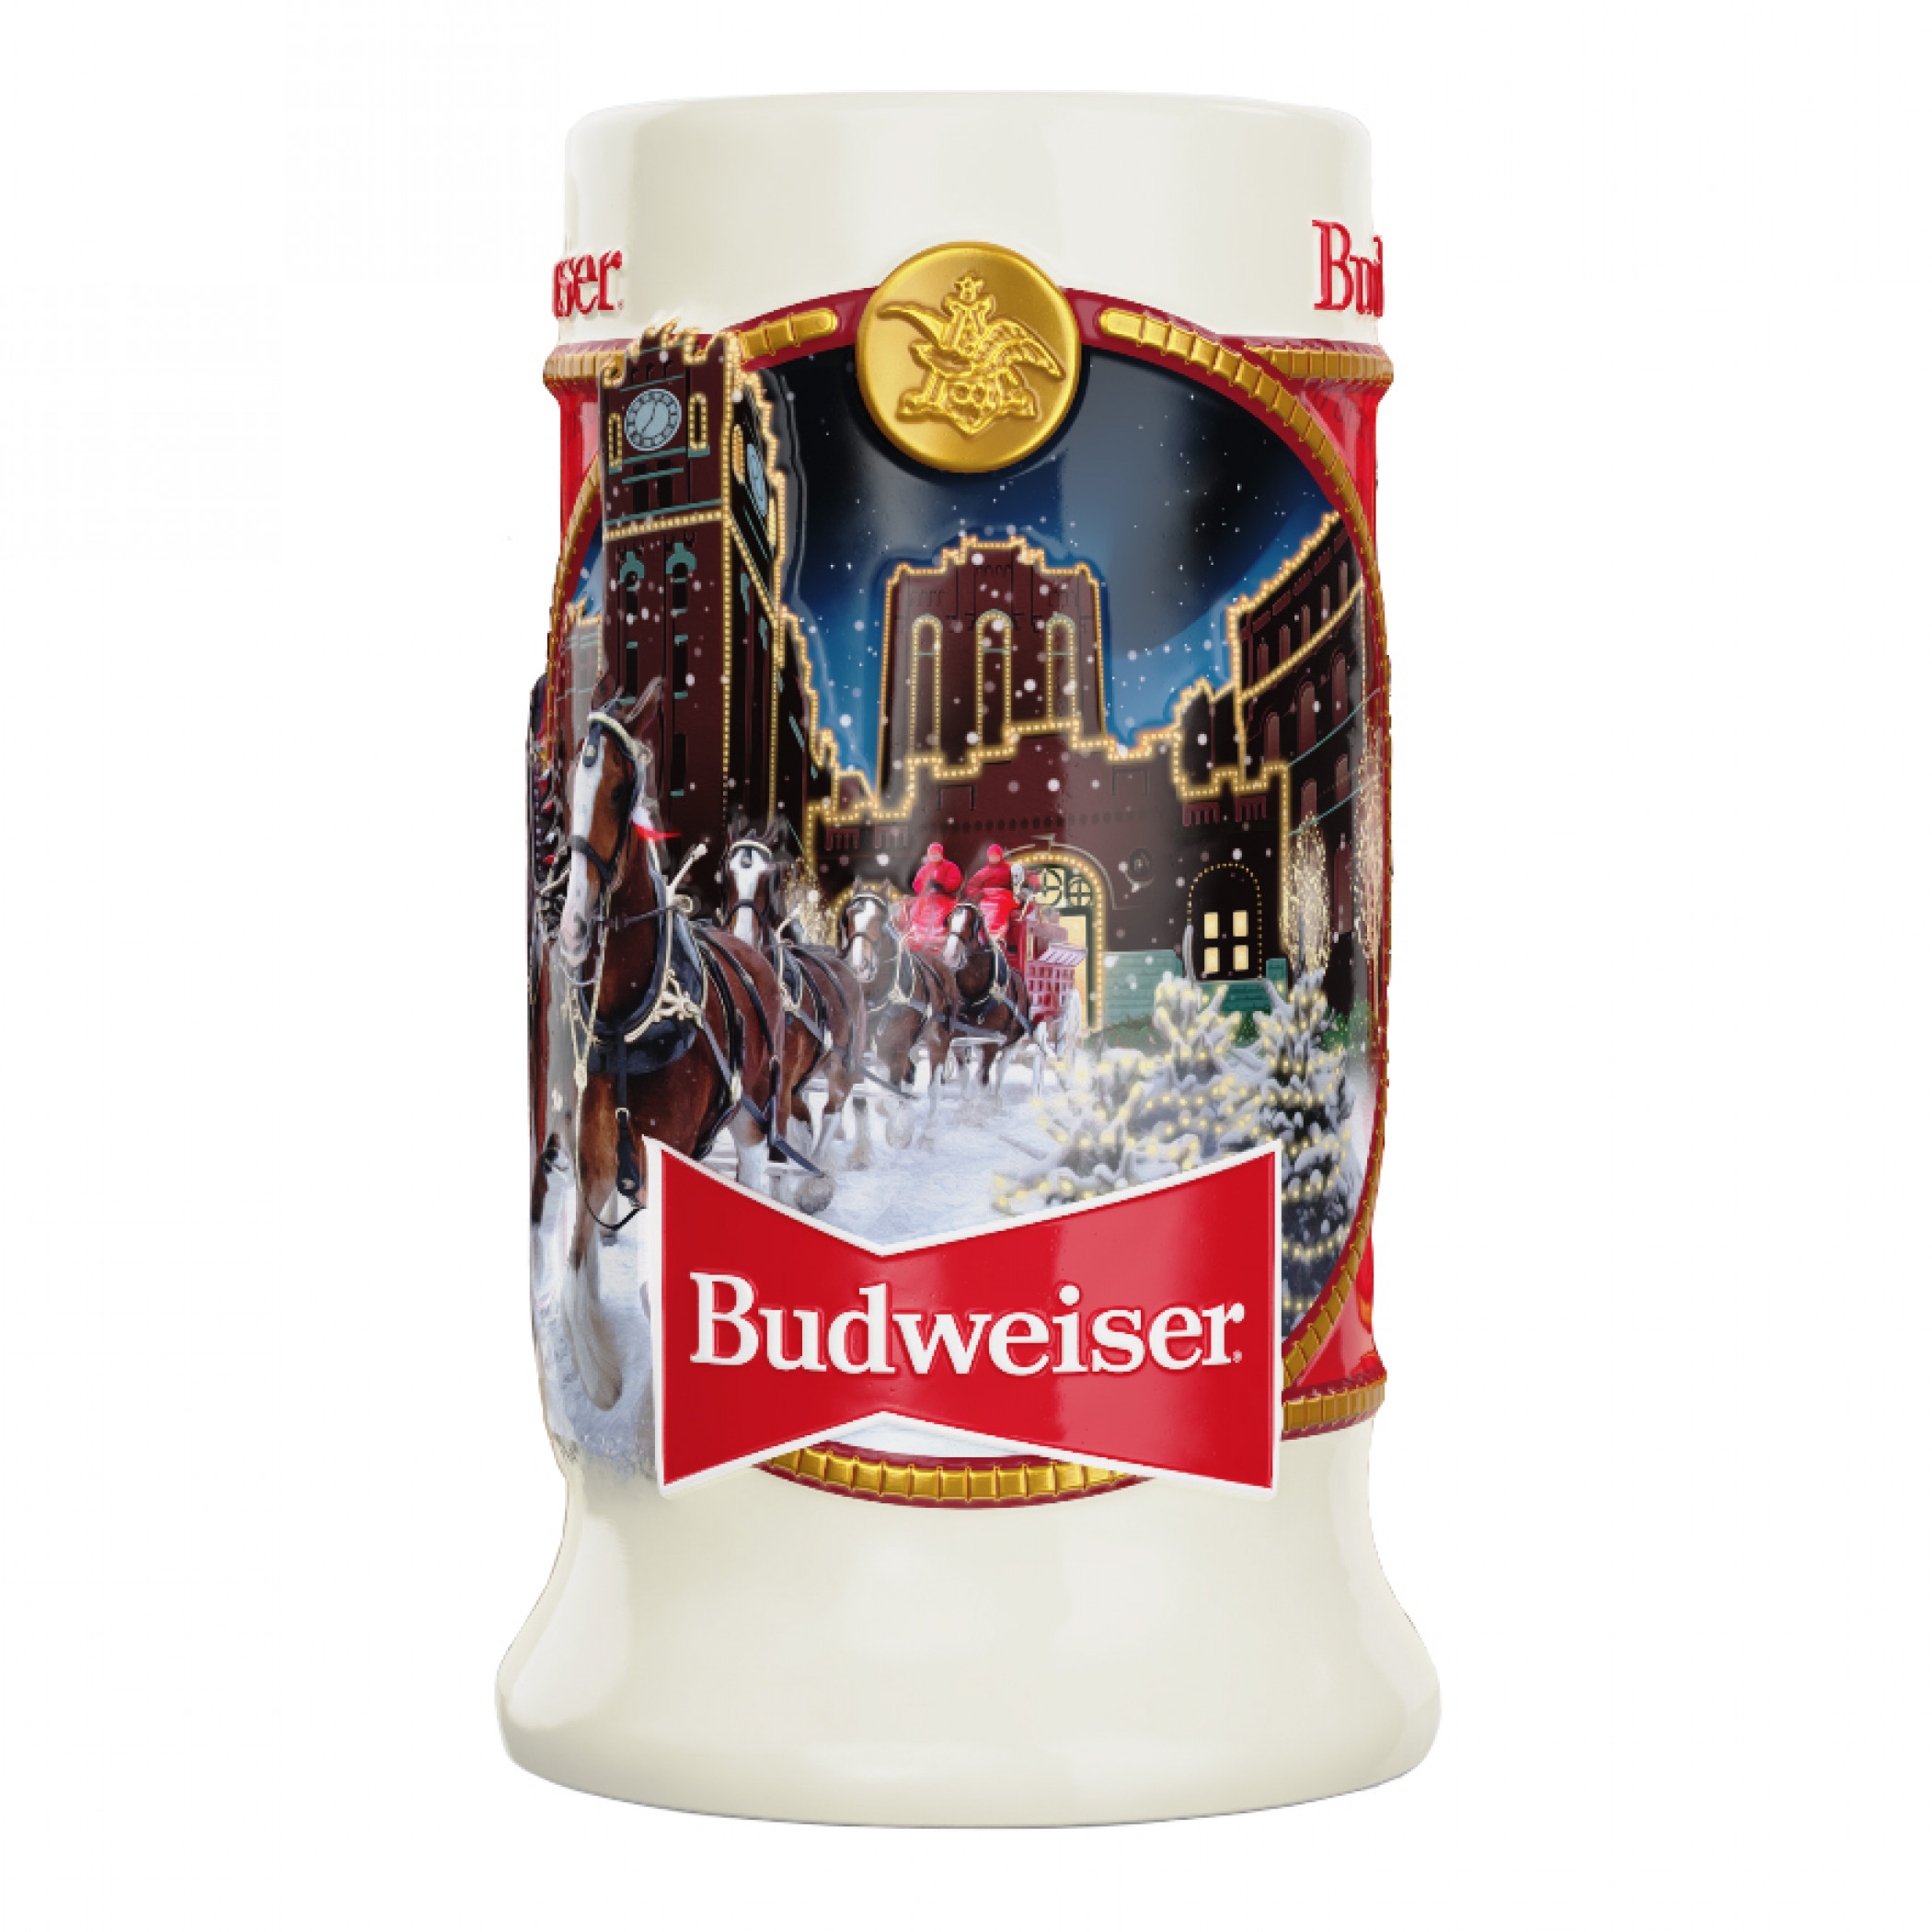 Budweiser 2020 Holiday Ceramic Stein Ornament